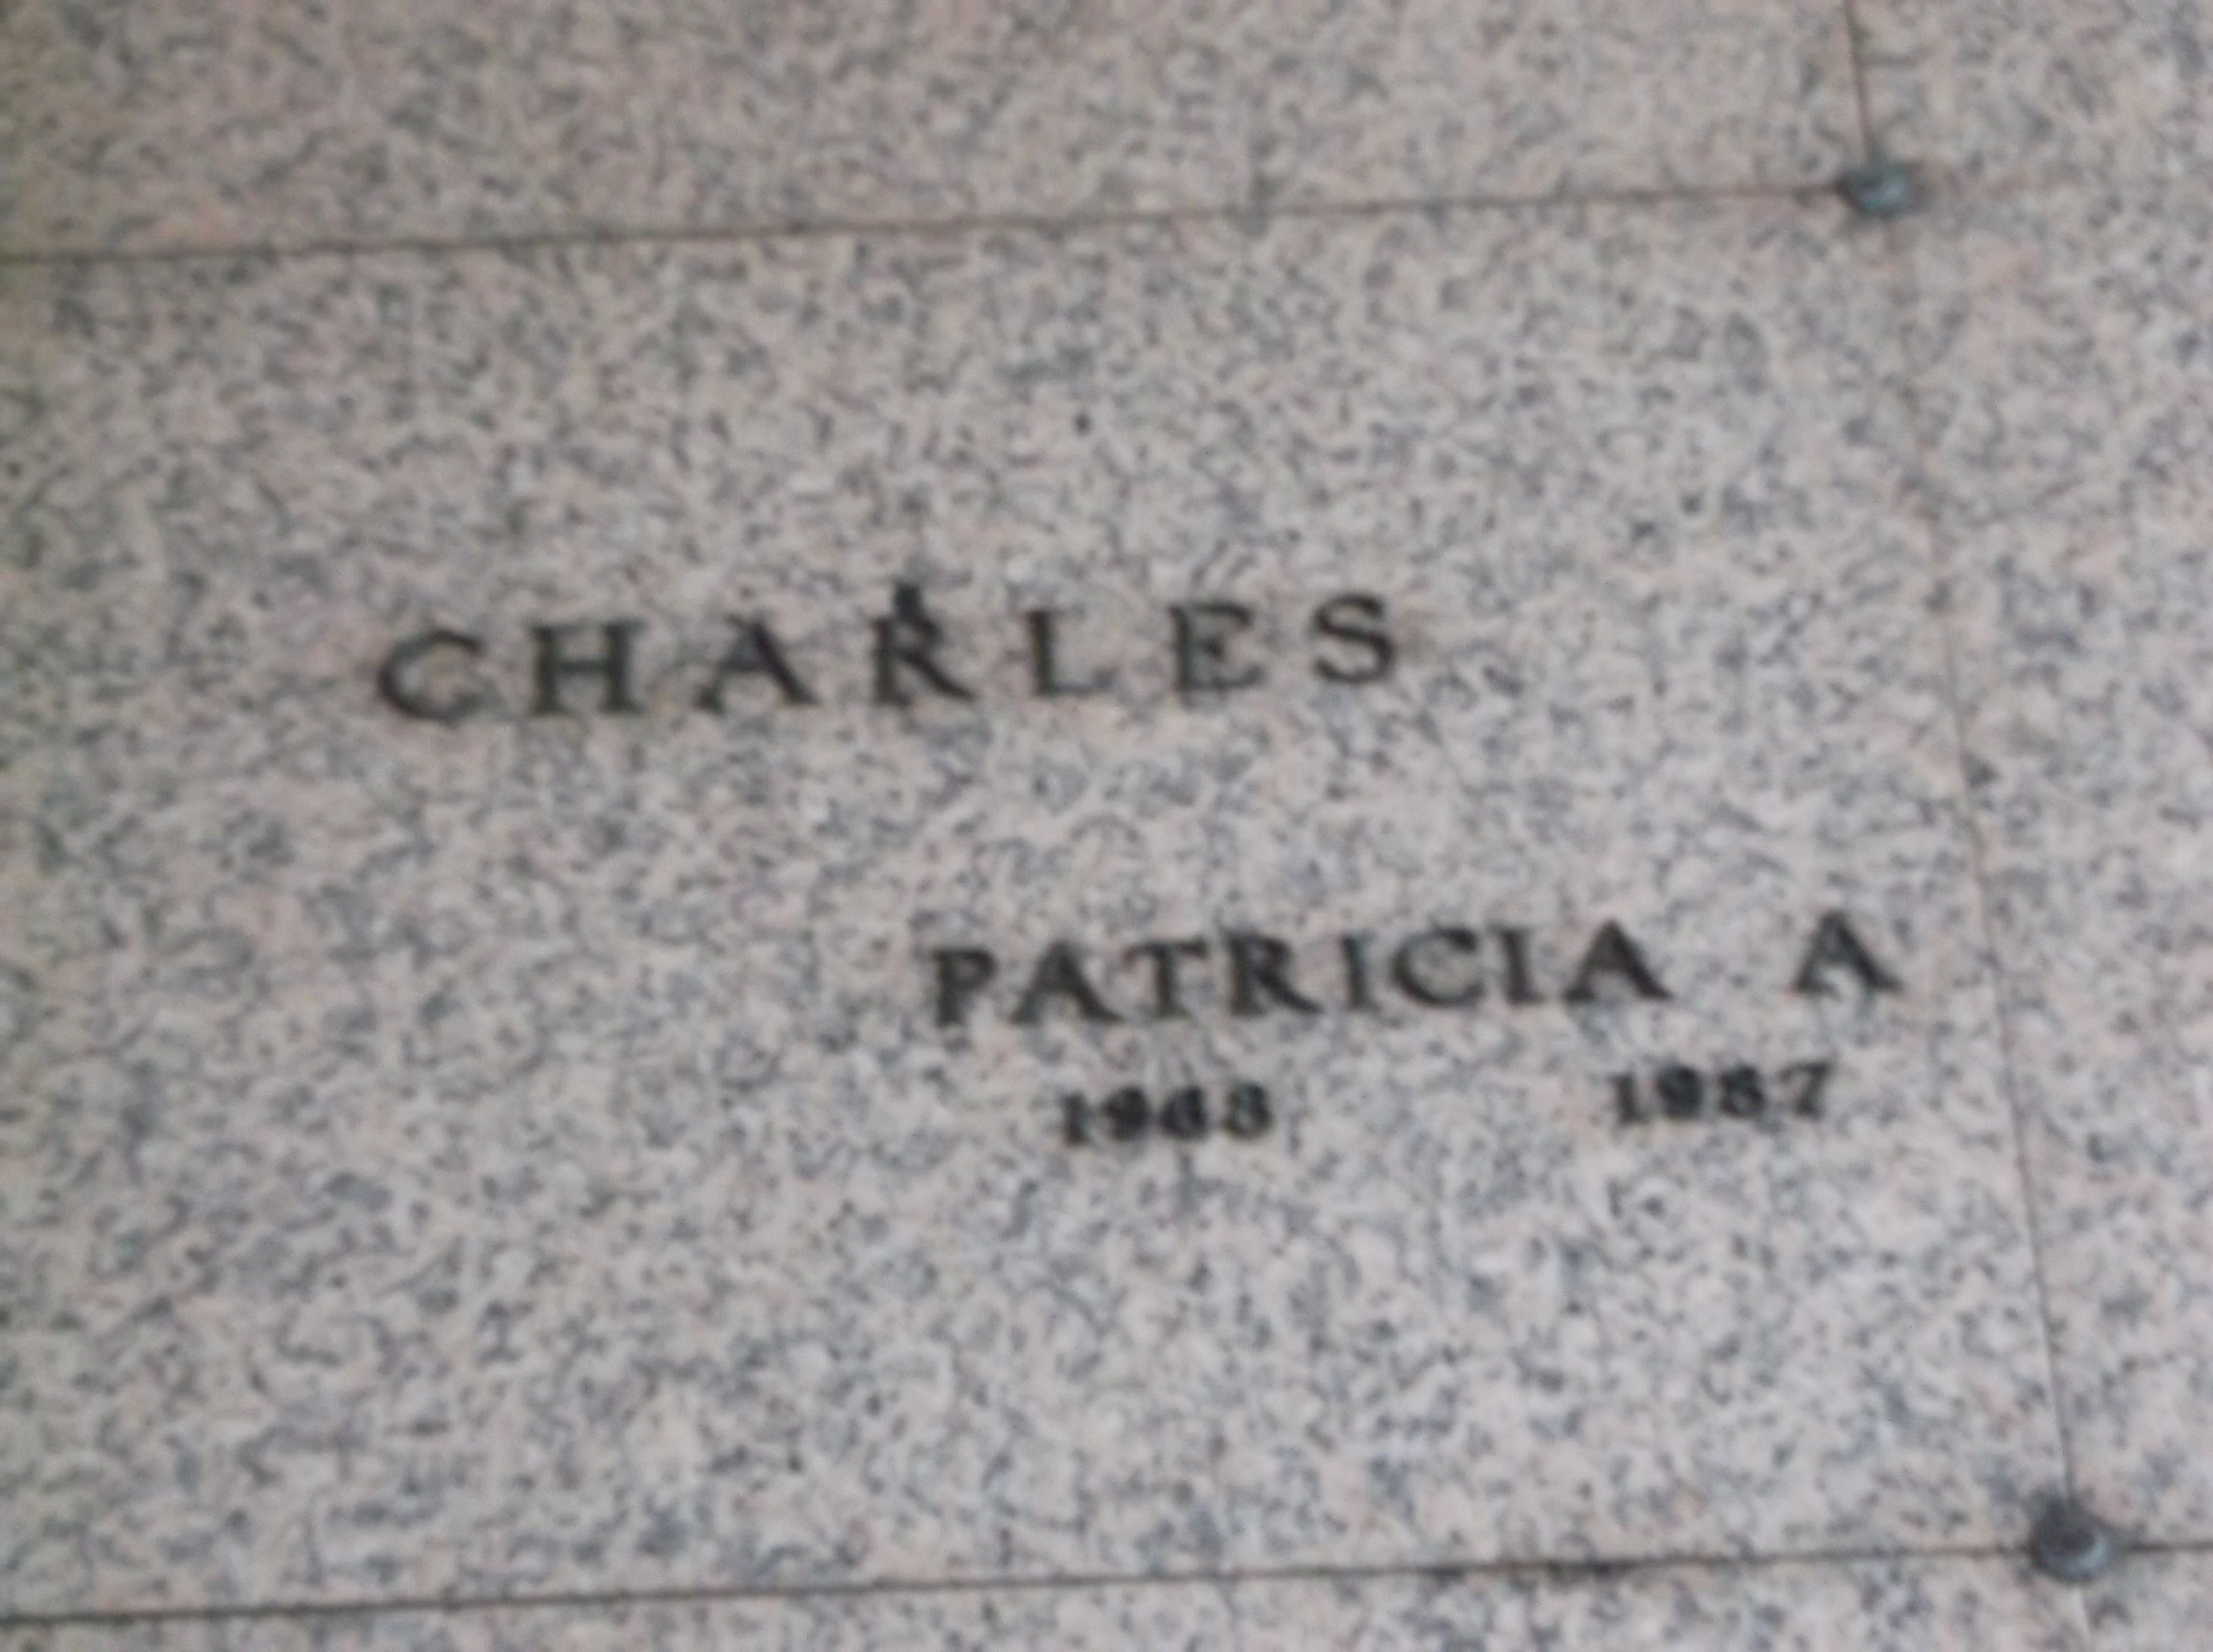 Patricia A Charles